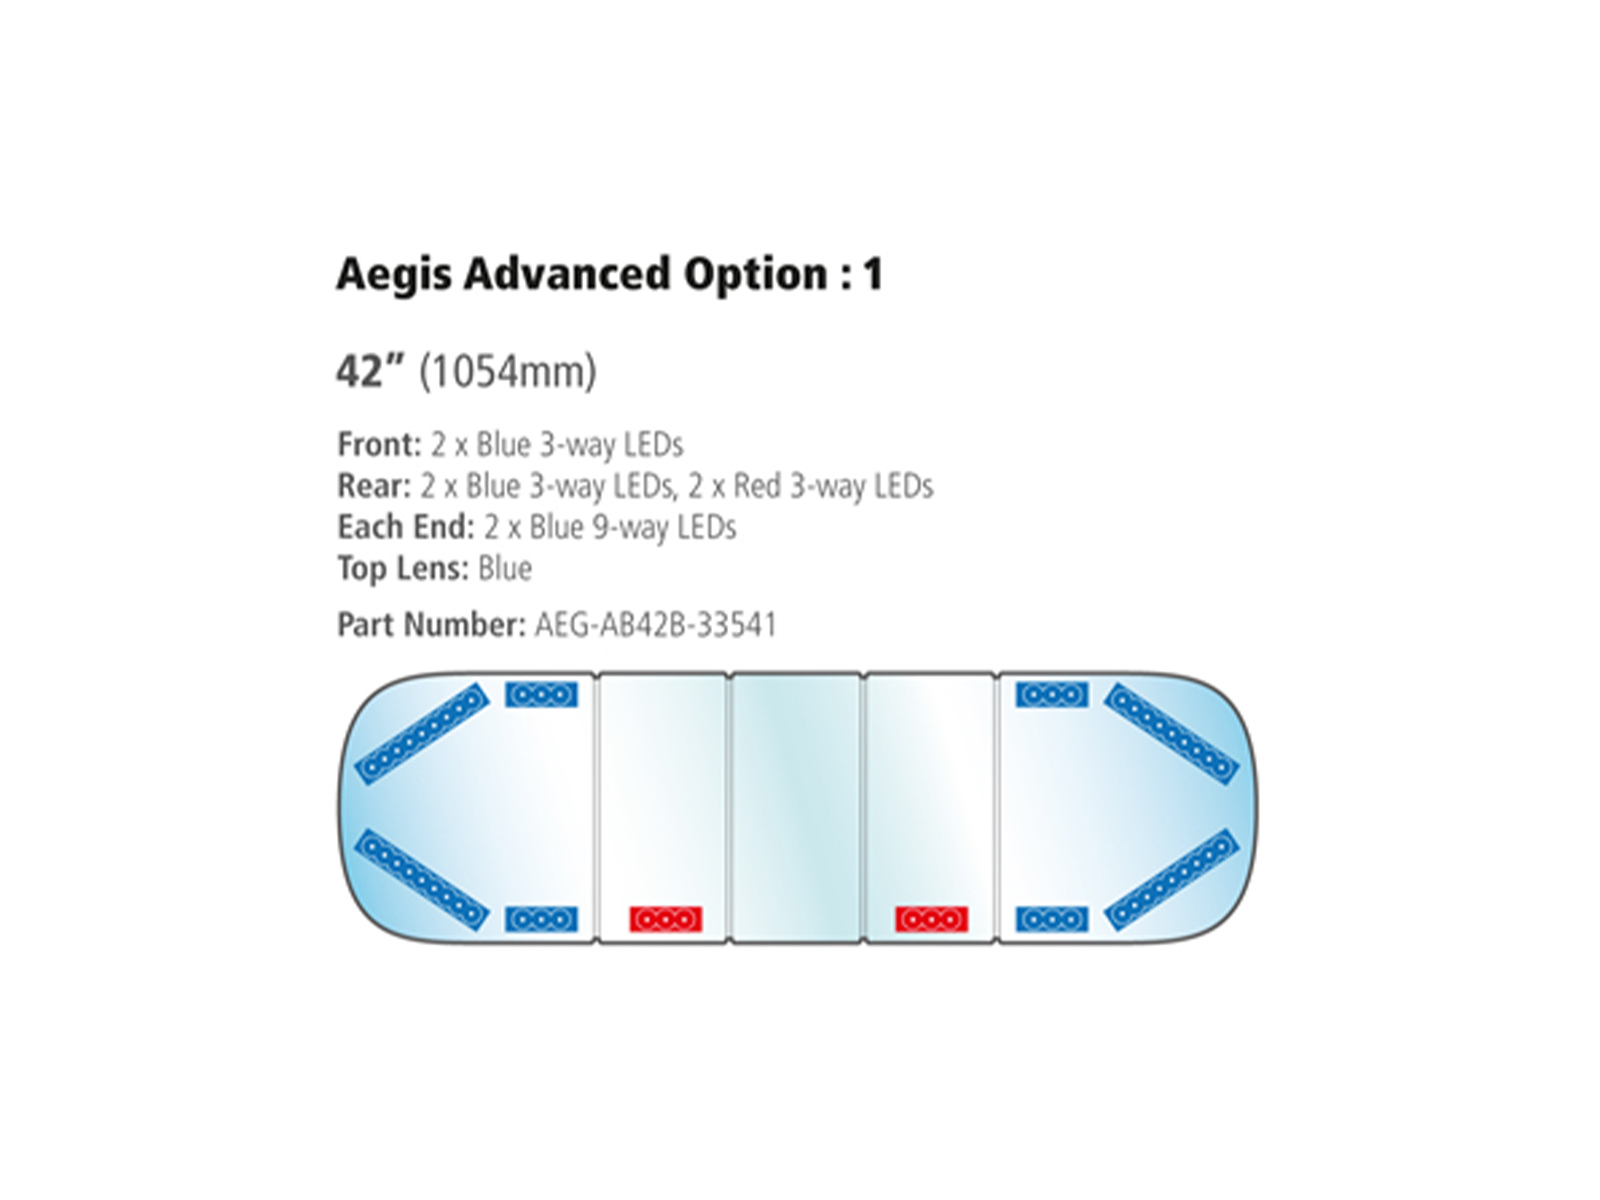 Aegis LED Lightbar Advanced Option 1 Diagram at 1054mm